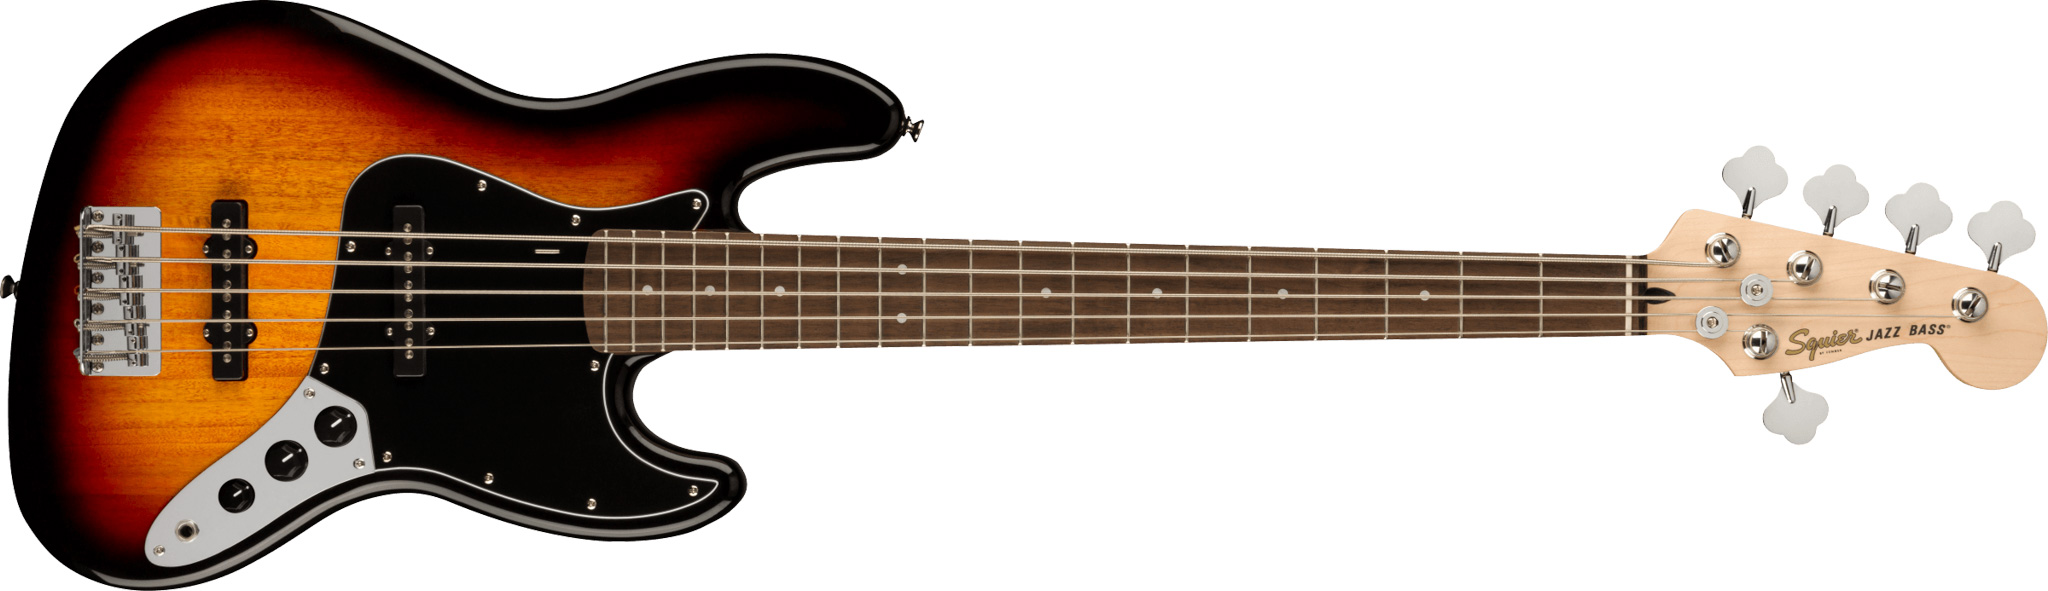 Fender Squier Affinity Jazz Bass V elektrisk bass